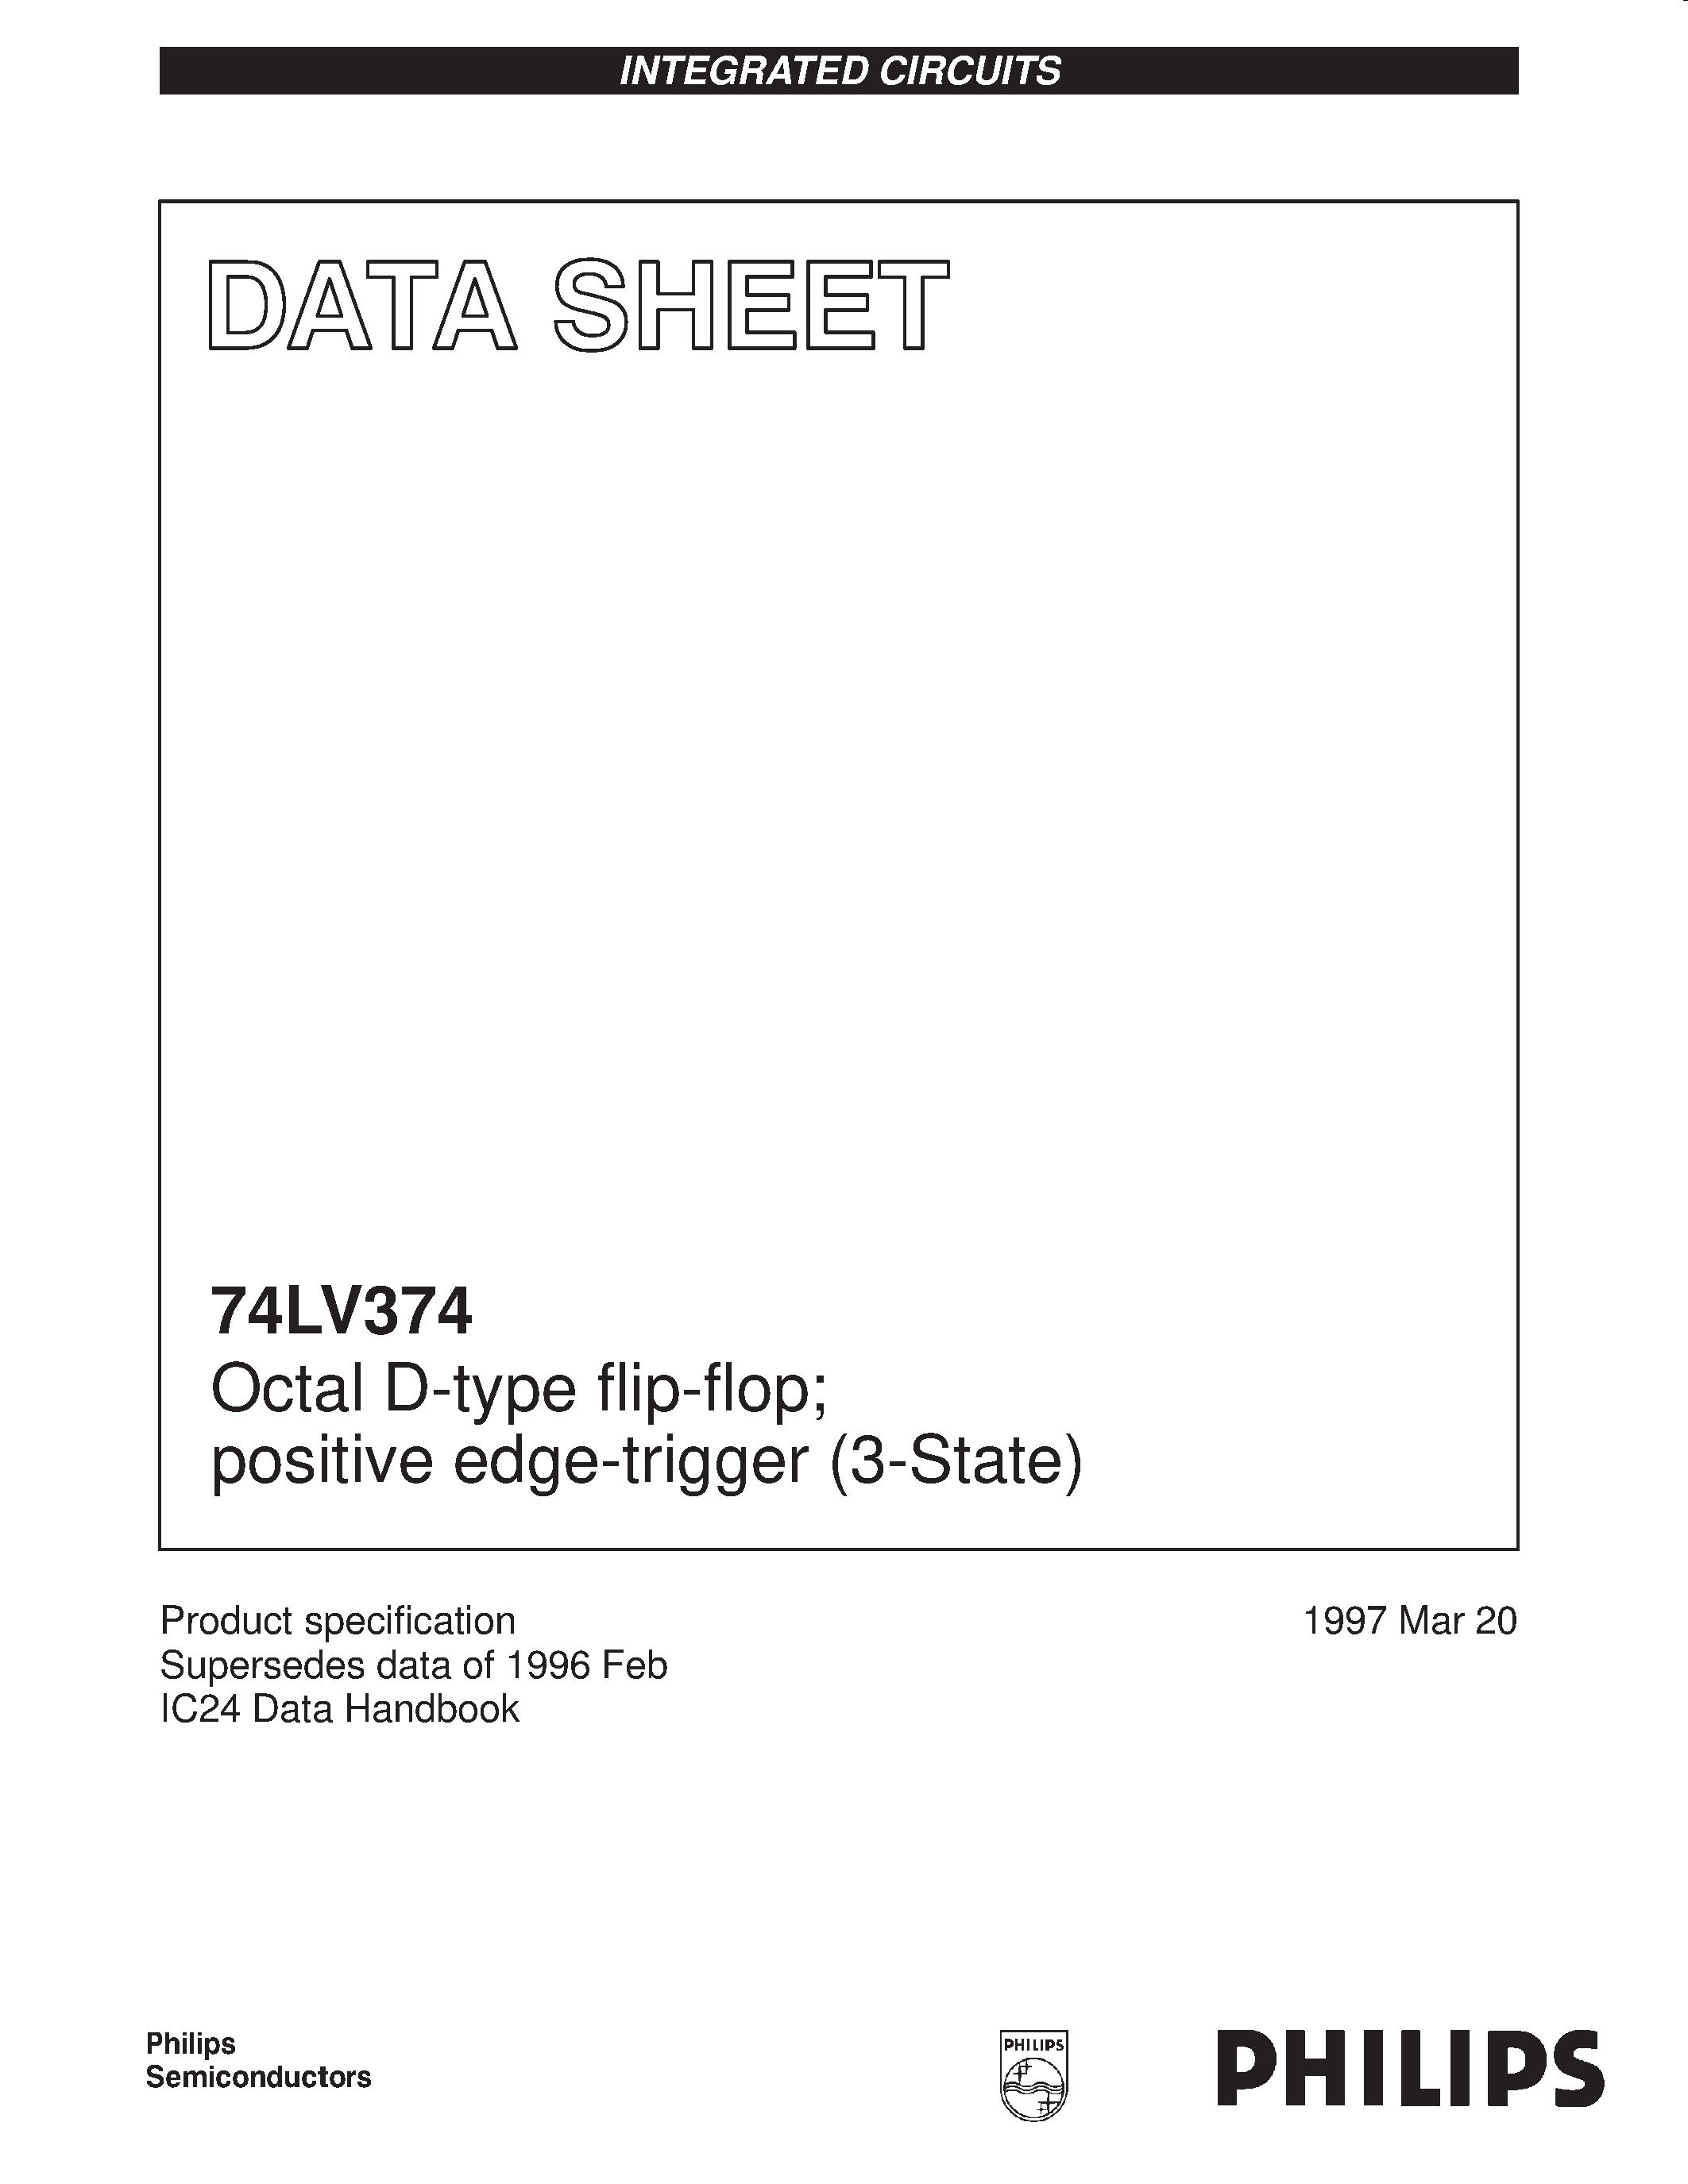 Даташит 74LV374 - Octal D-type flip-flop; positive edge-trigger 3-State страница 1